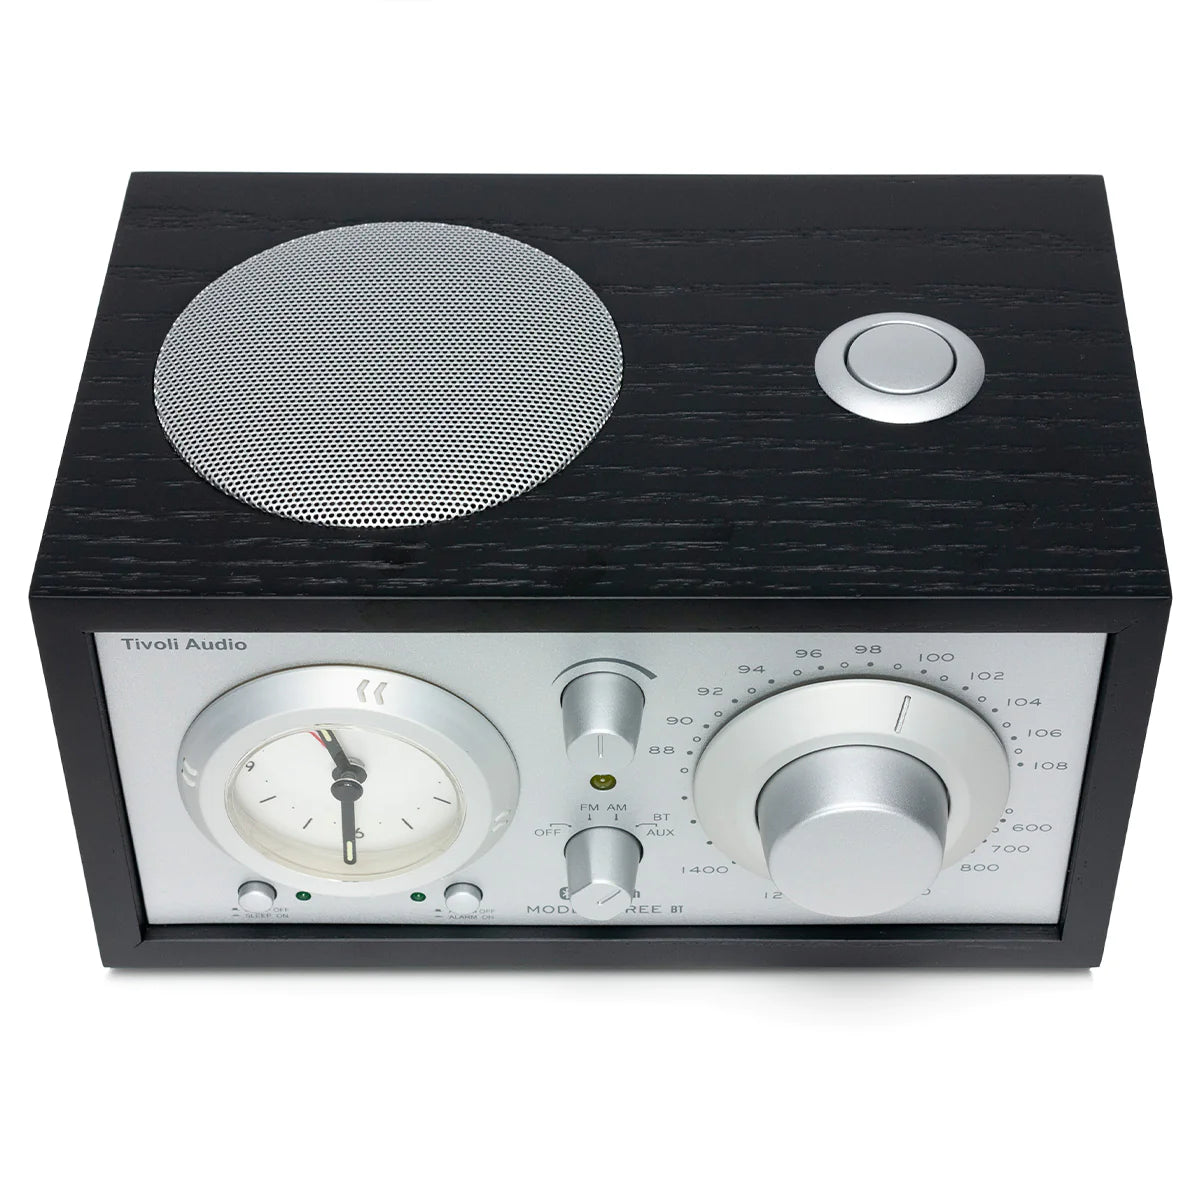 The Tivoli Audio Model Three BT blends classic design, superior sound and Bluetooth connectivity. Top black image